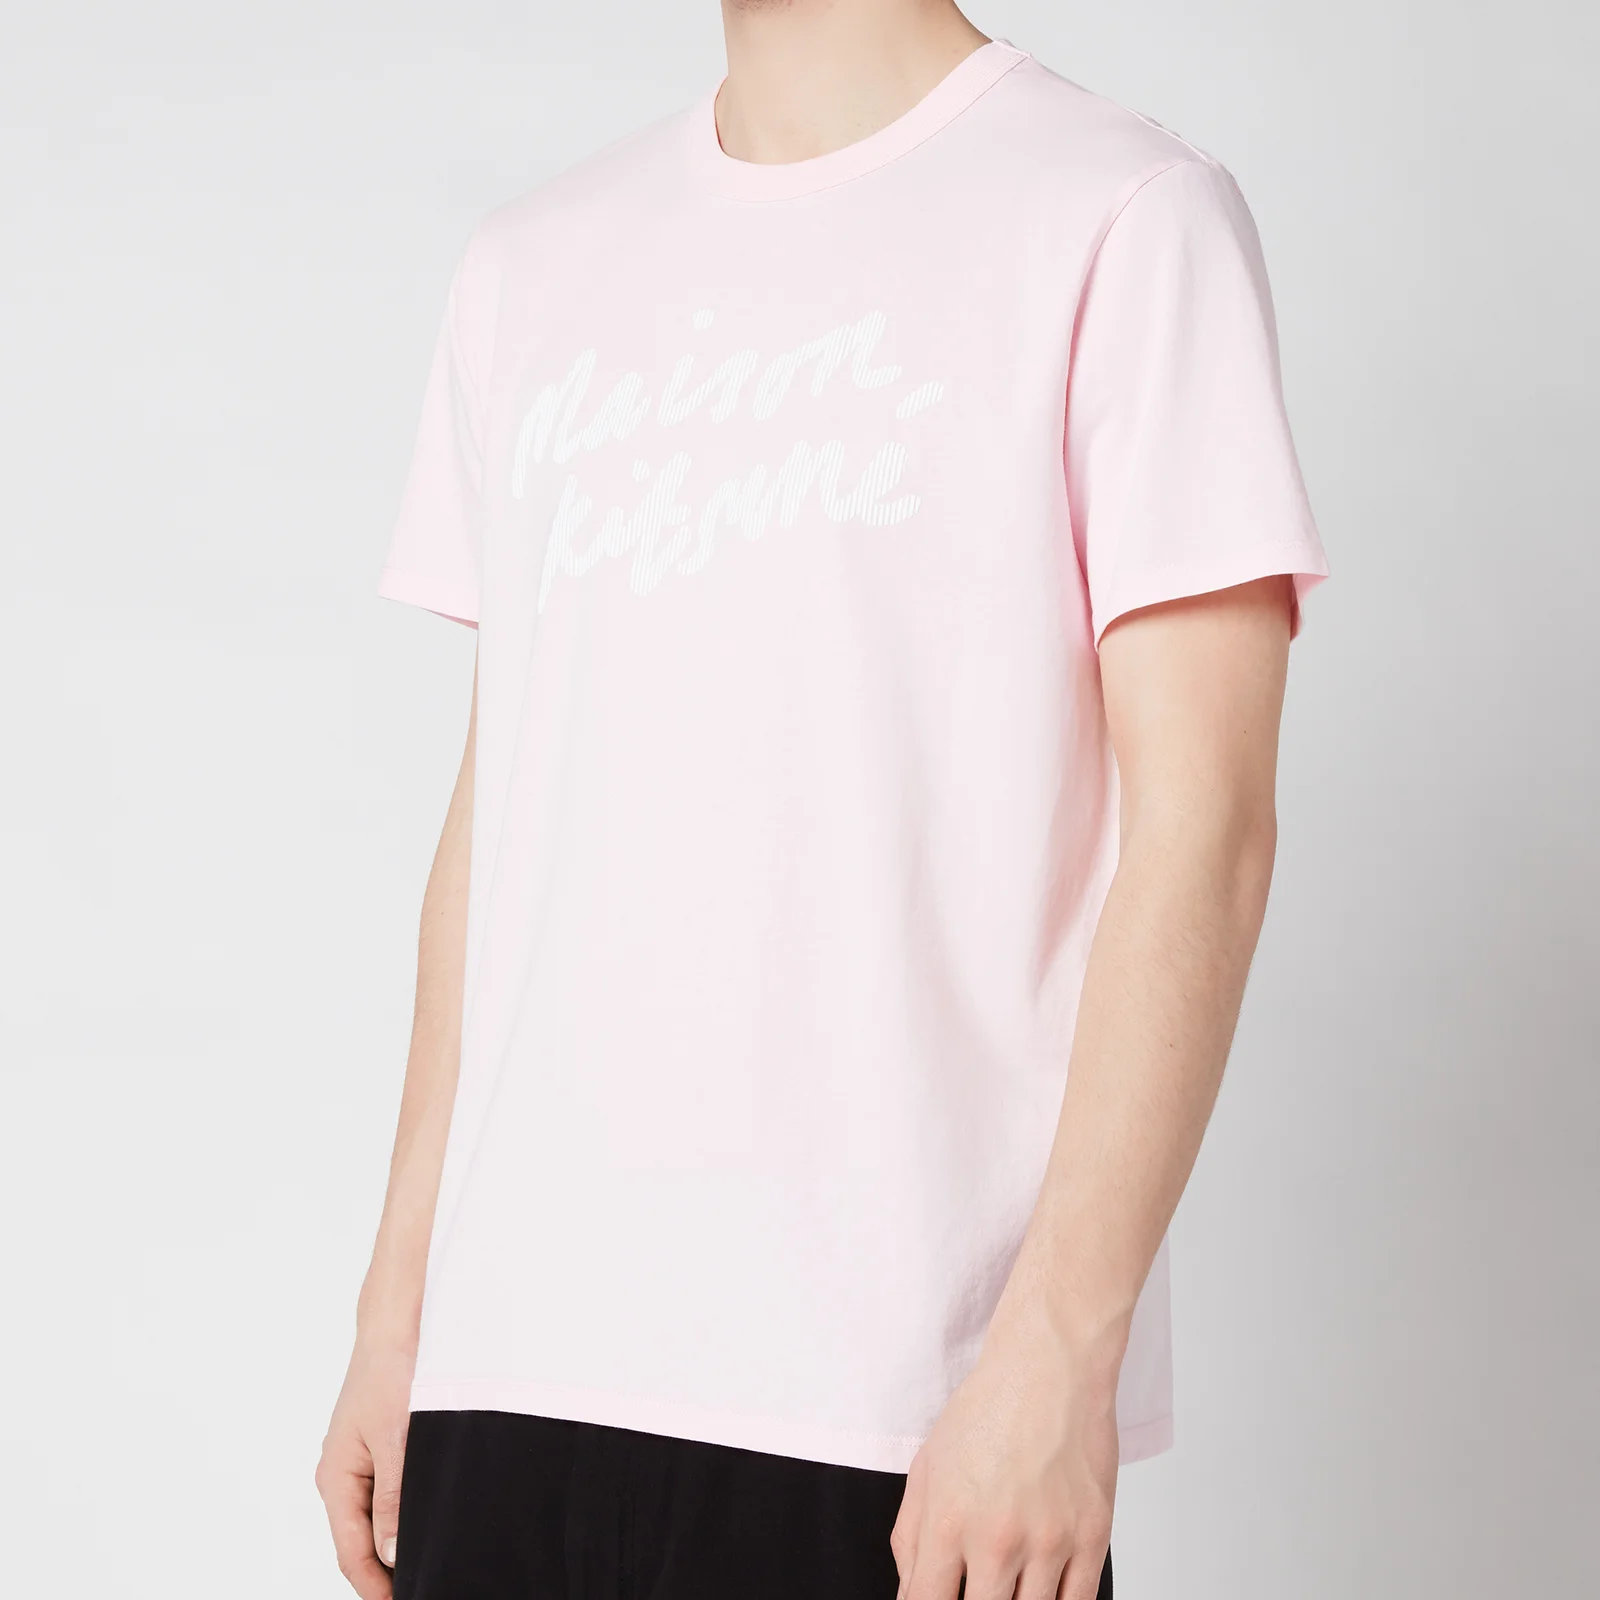 Maison Kitsuné Men's Handwriting Classic T-Shirt - Light Pink Image 1